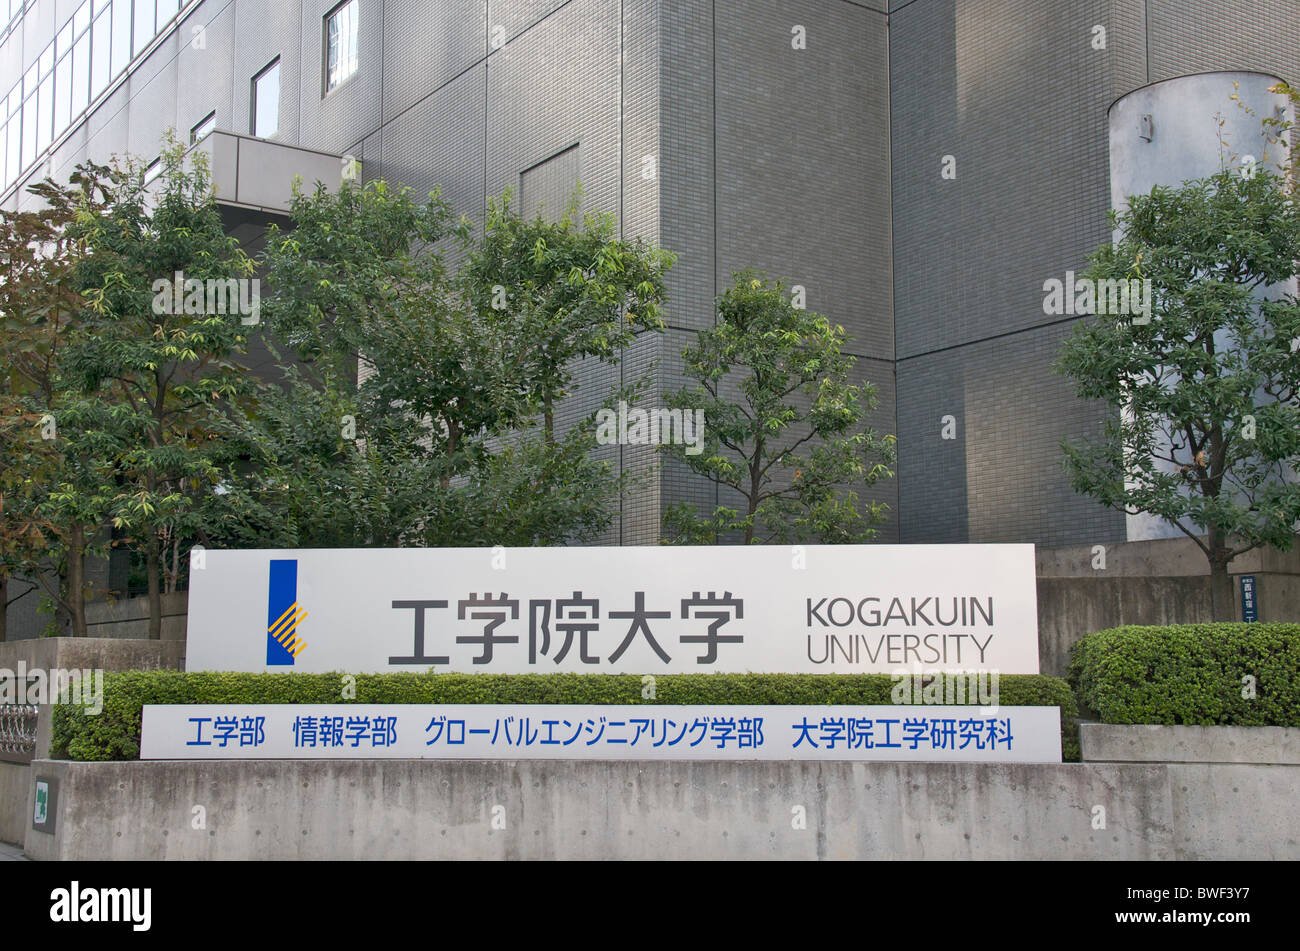 Kogakuin university,  Shinjuku, Tokyo, Japan Stock Photo